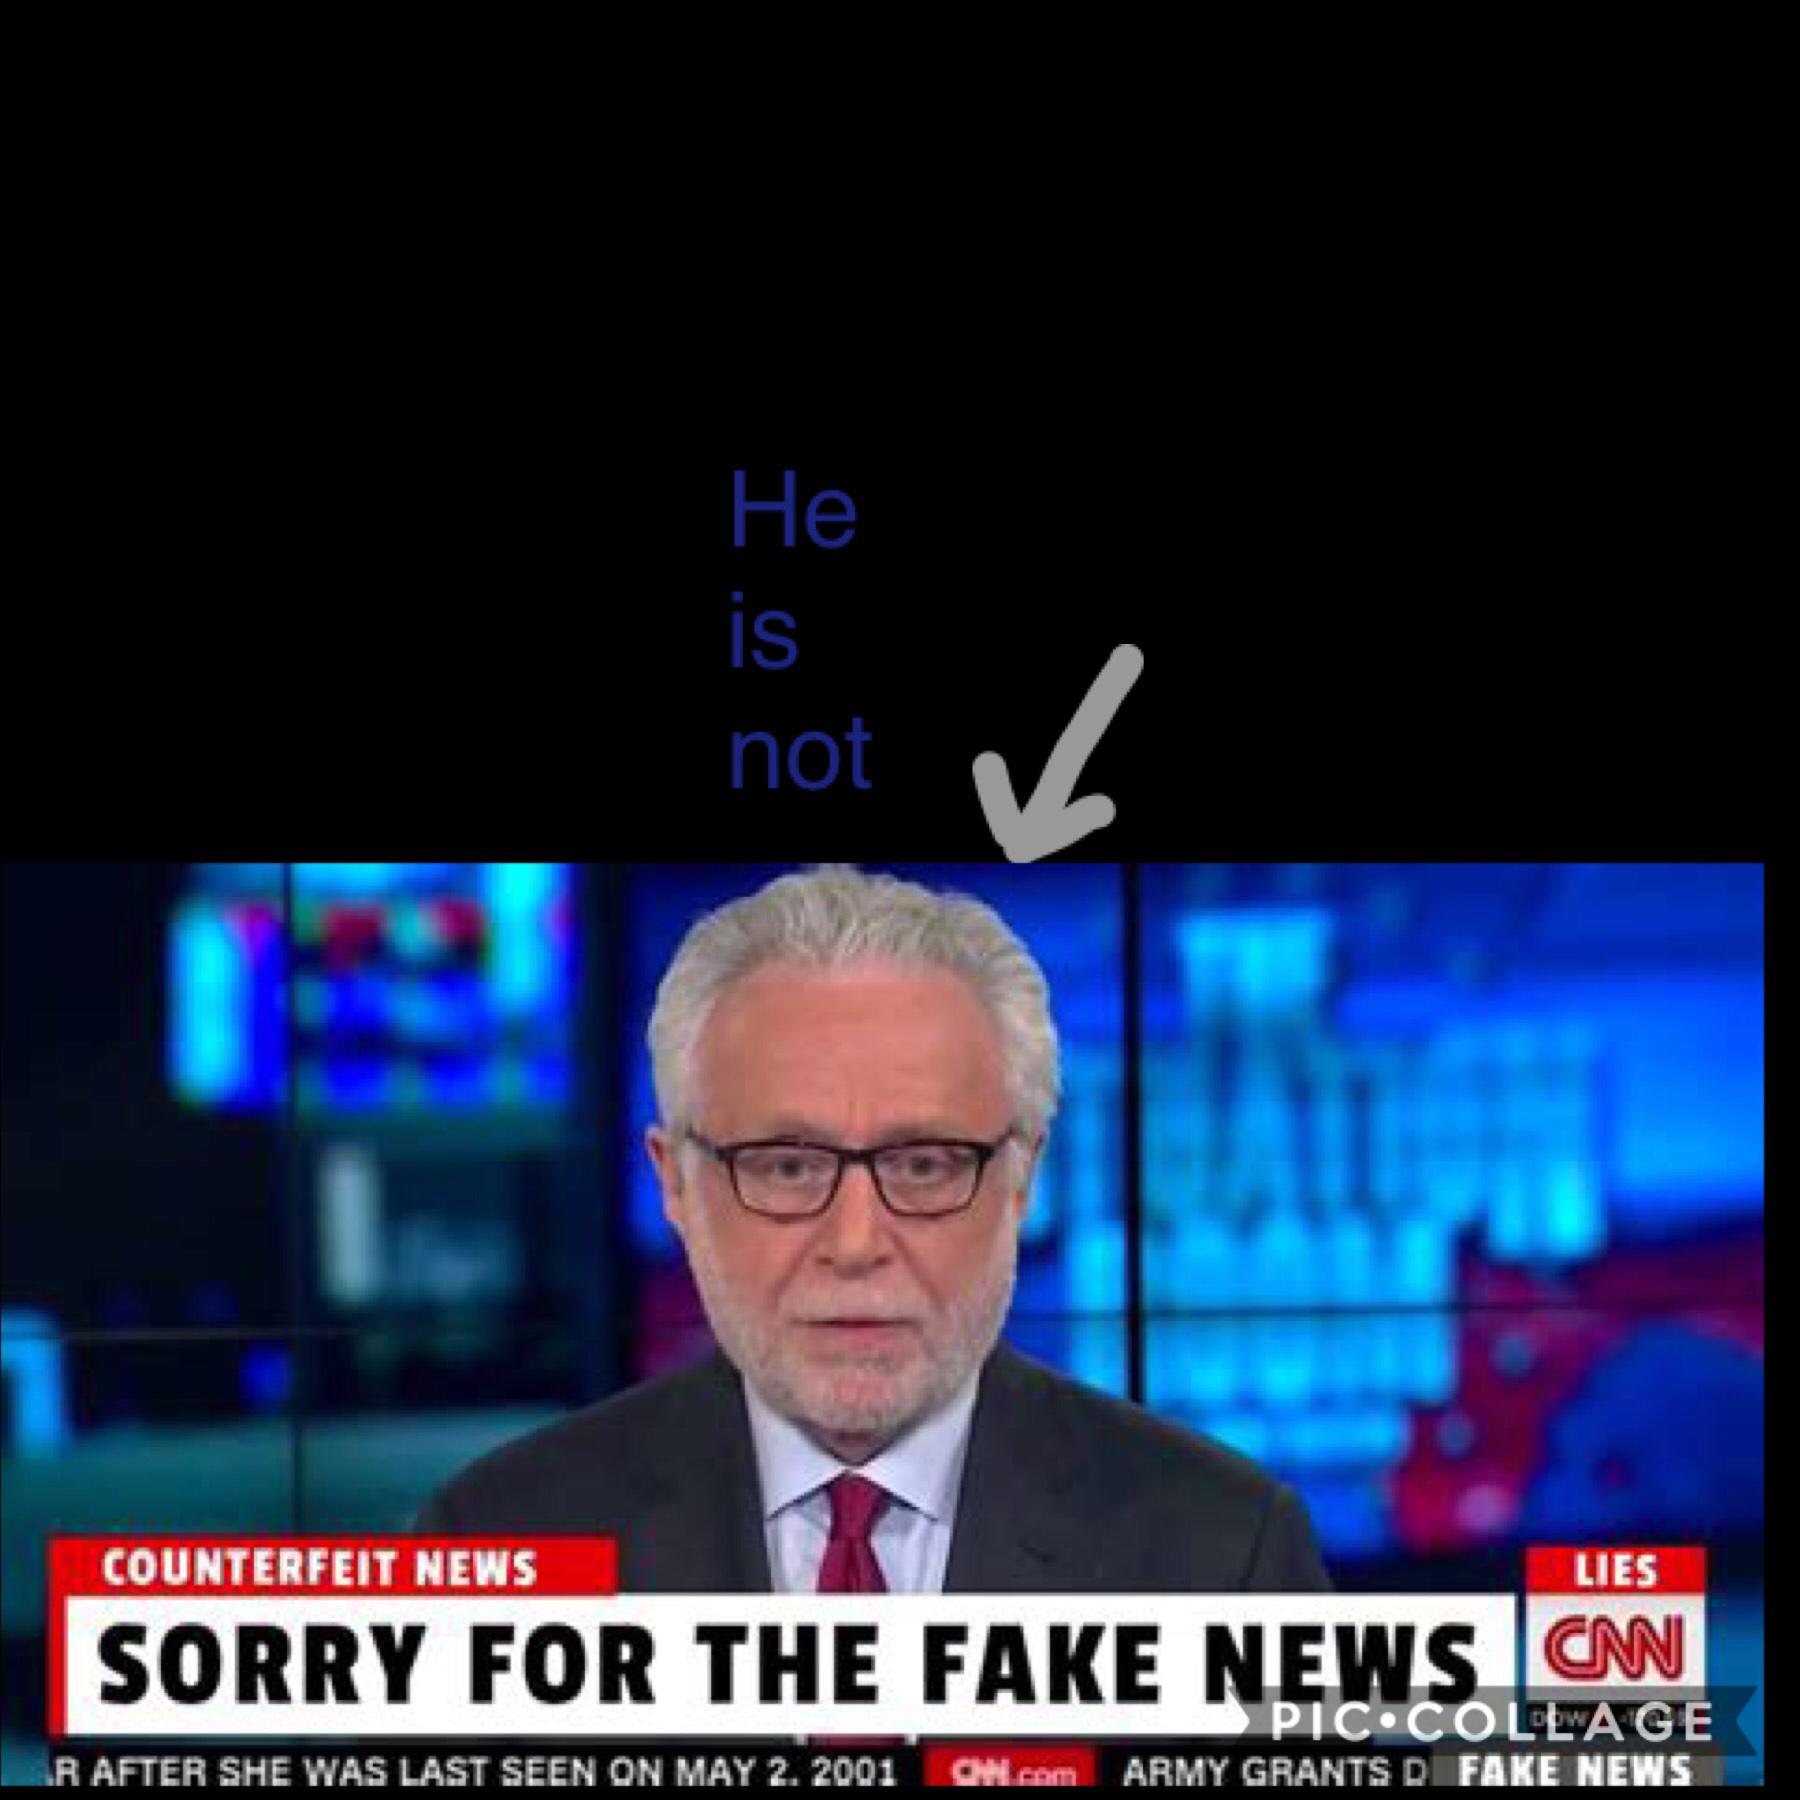 CNN always has fake news up their sleeves 